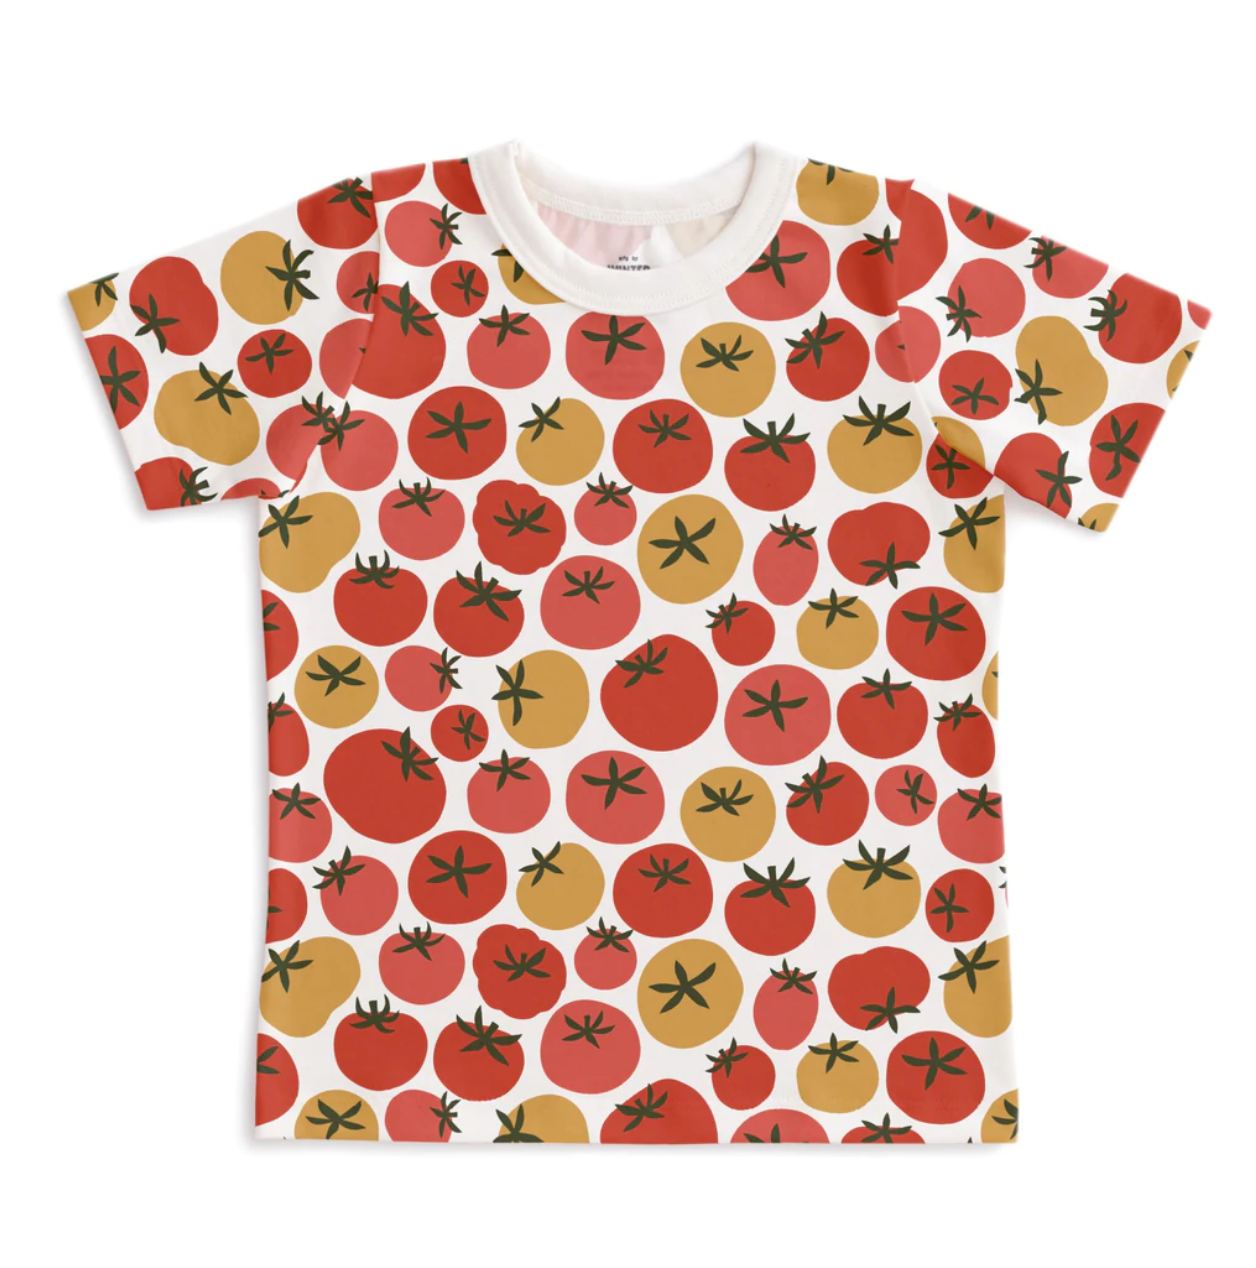 Tomato short sleeve t-shirt